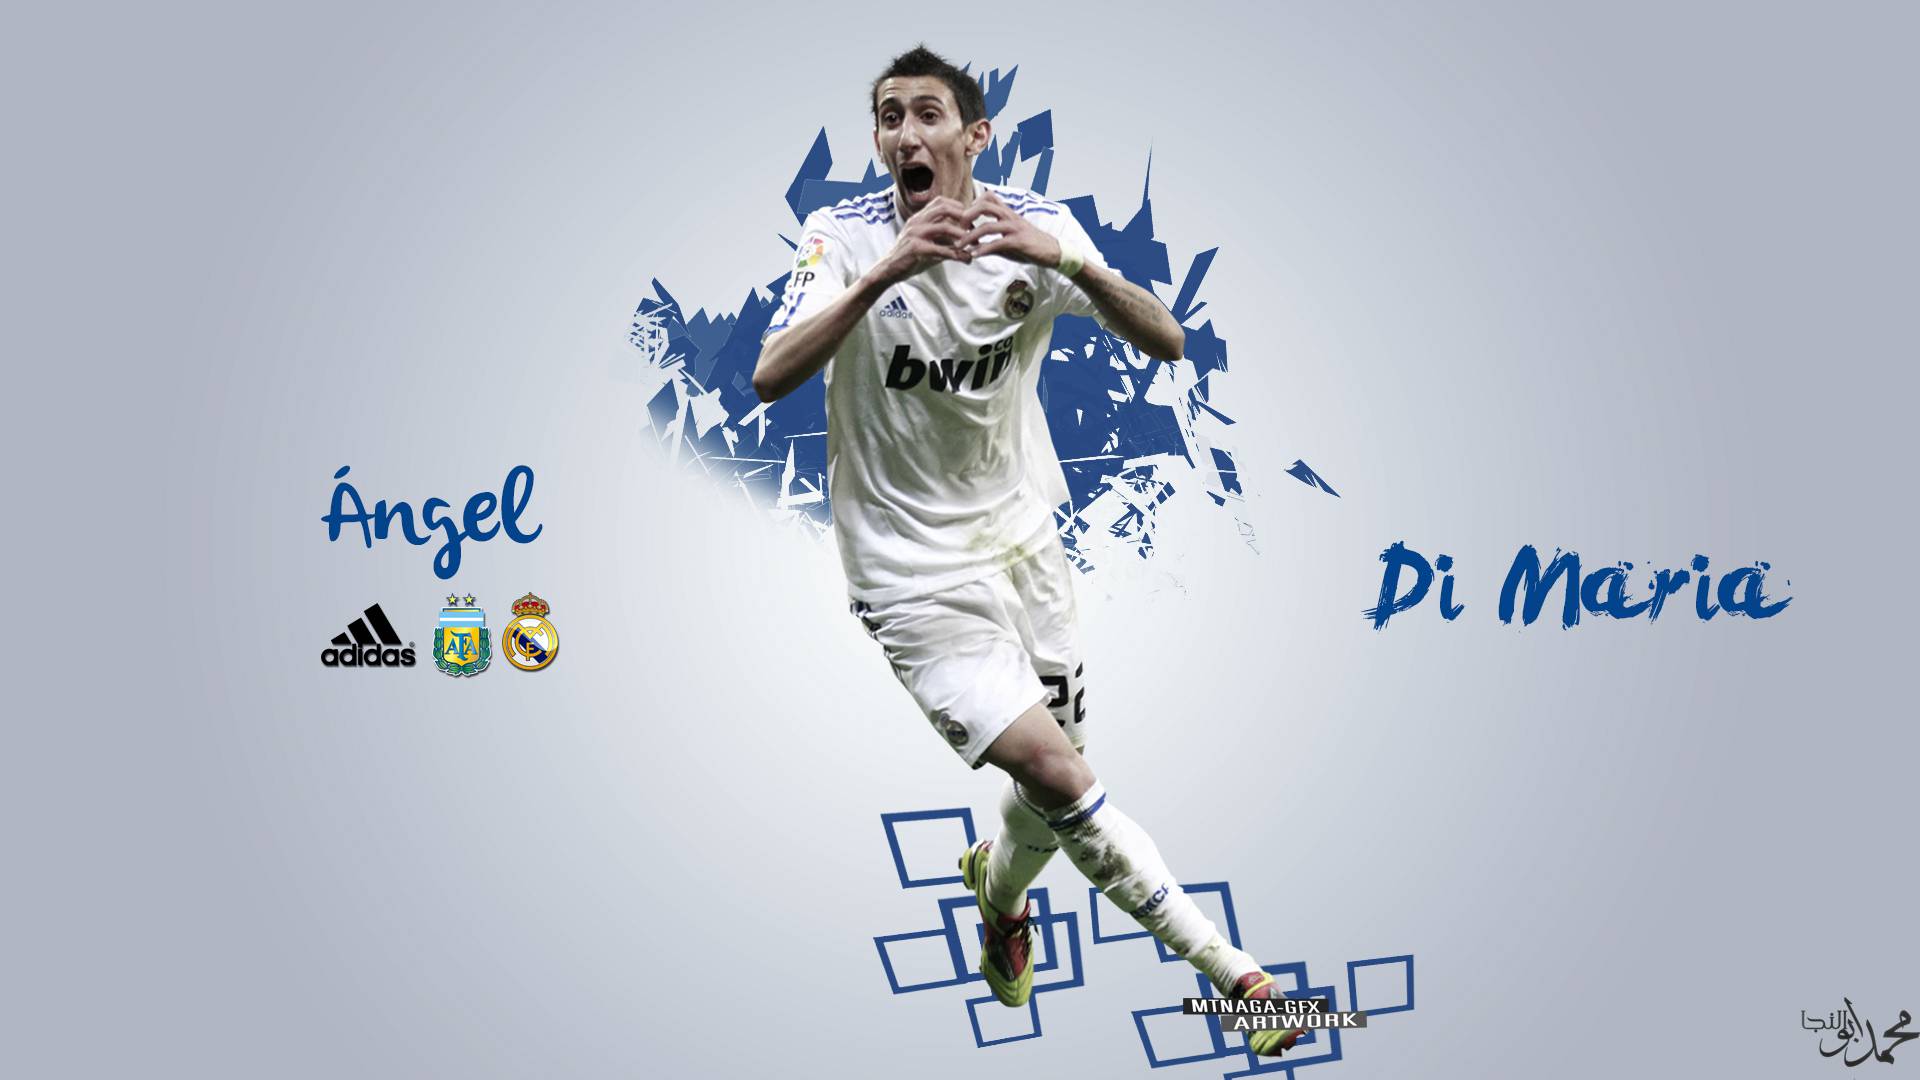 Ángel María Real Madrid Photo HD Wallpaper